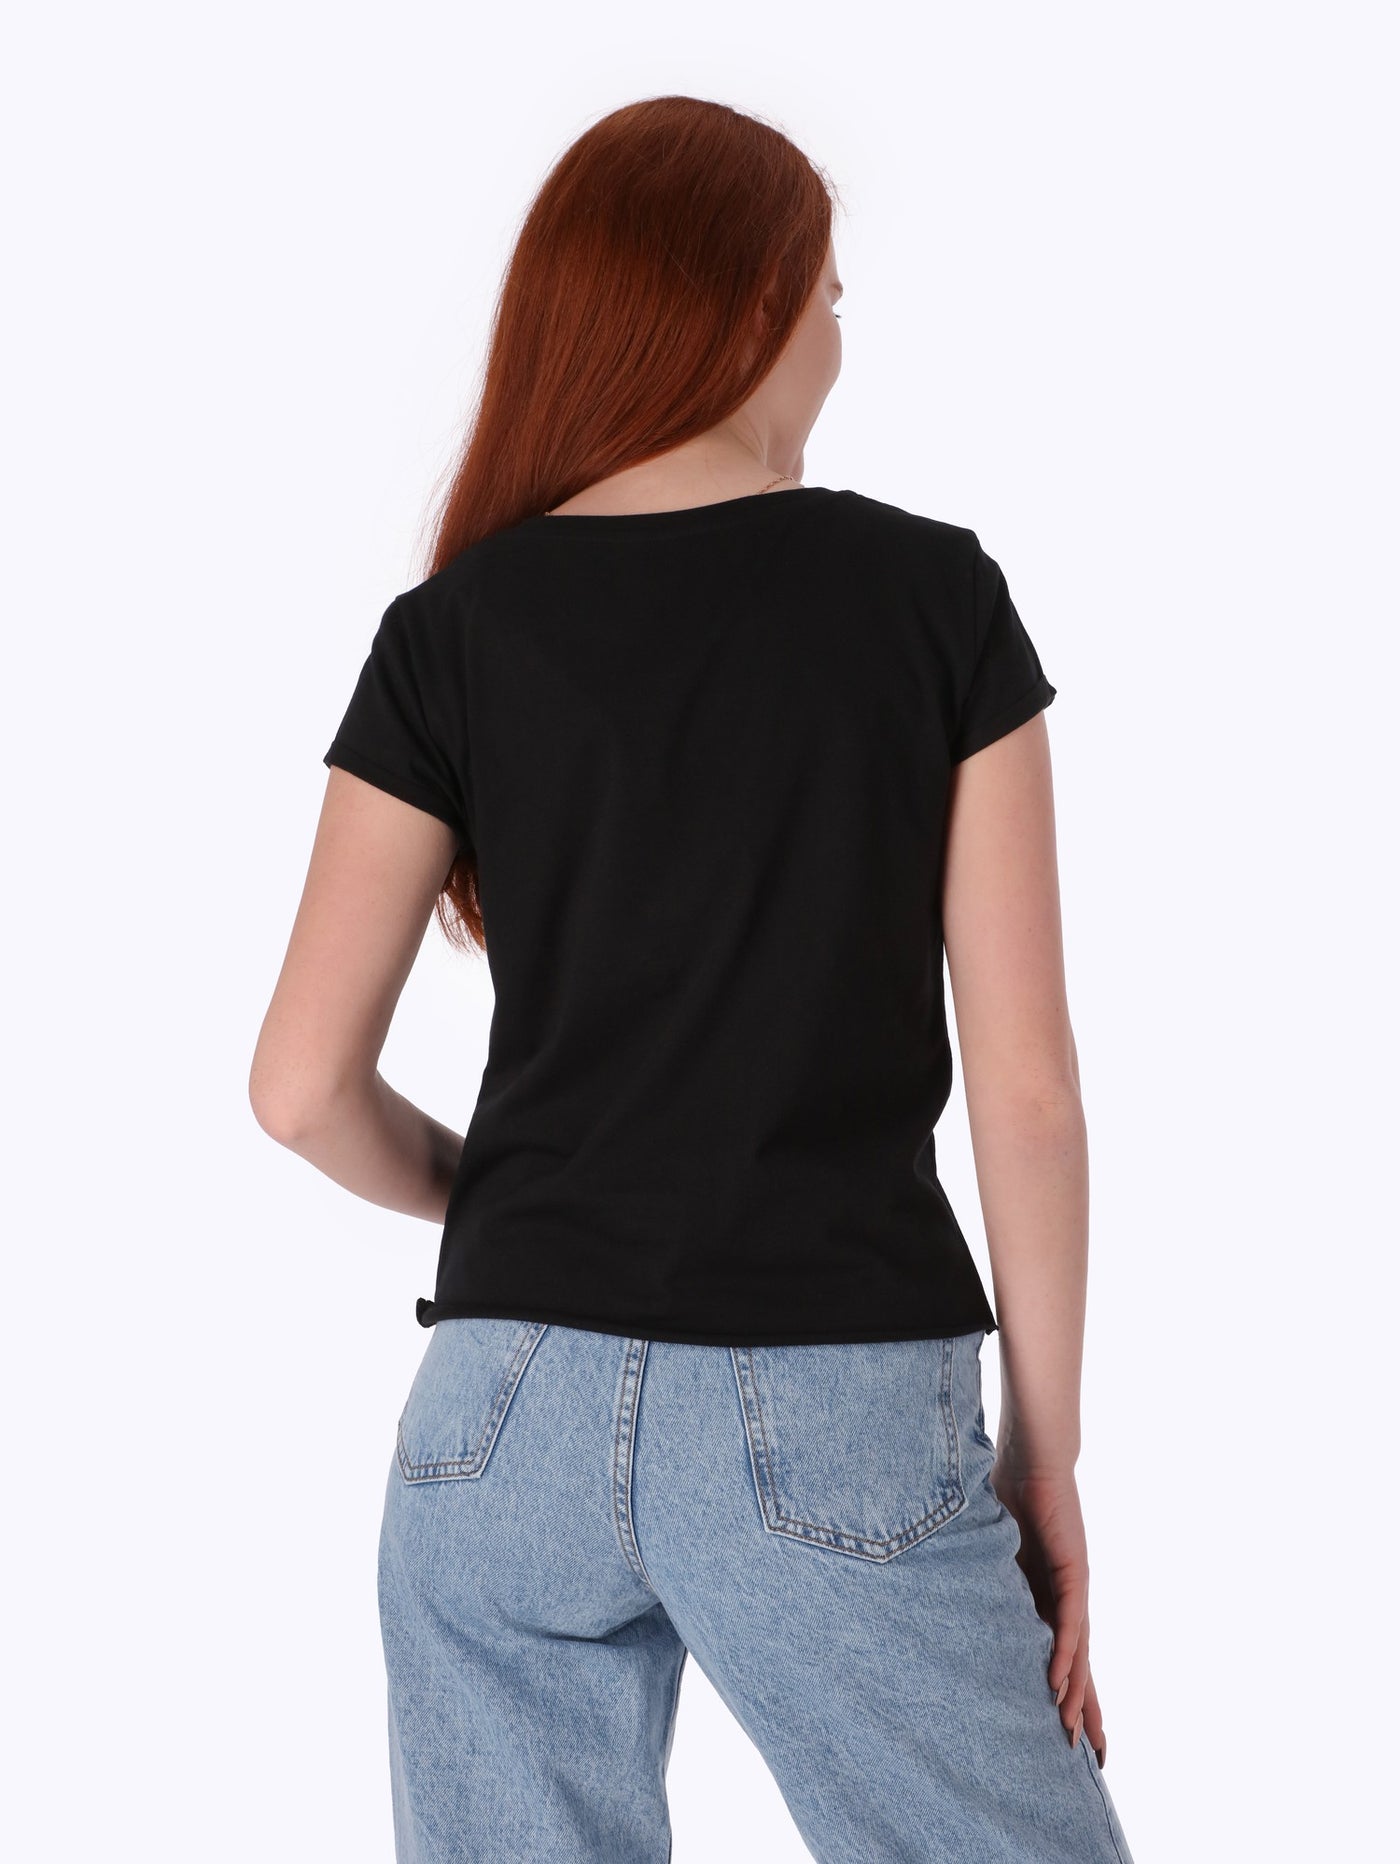 T-Shirt - Cap Sleeves - Front Print